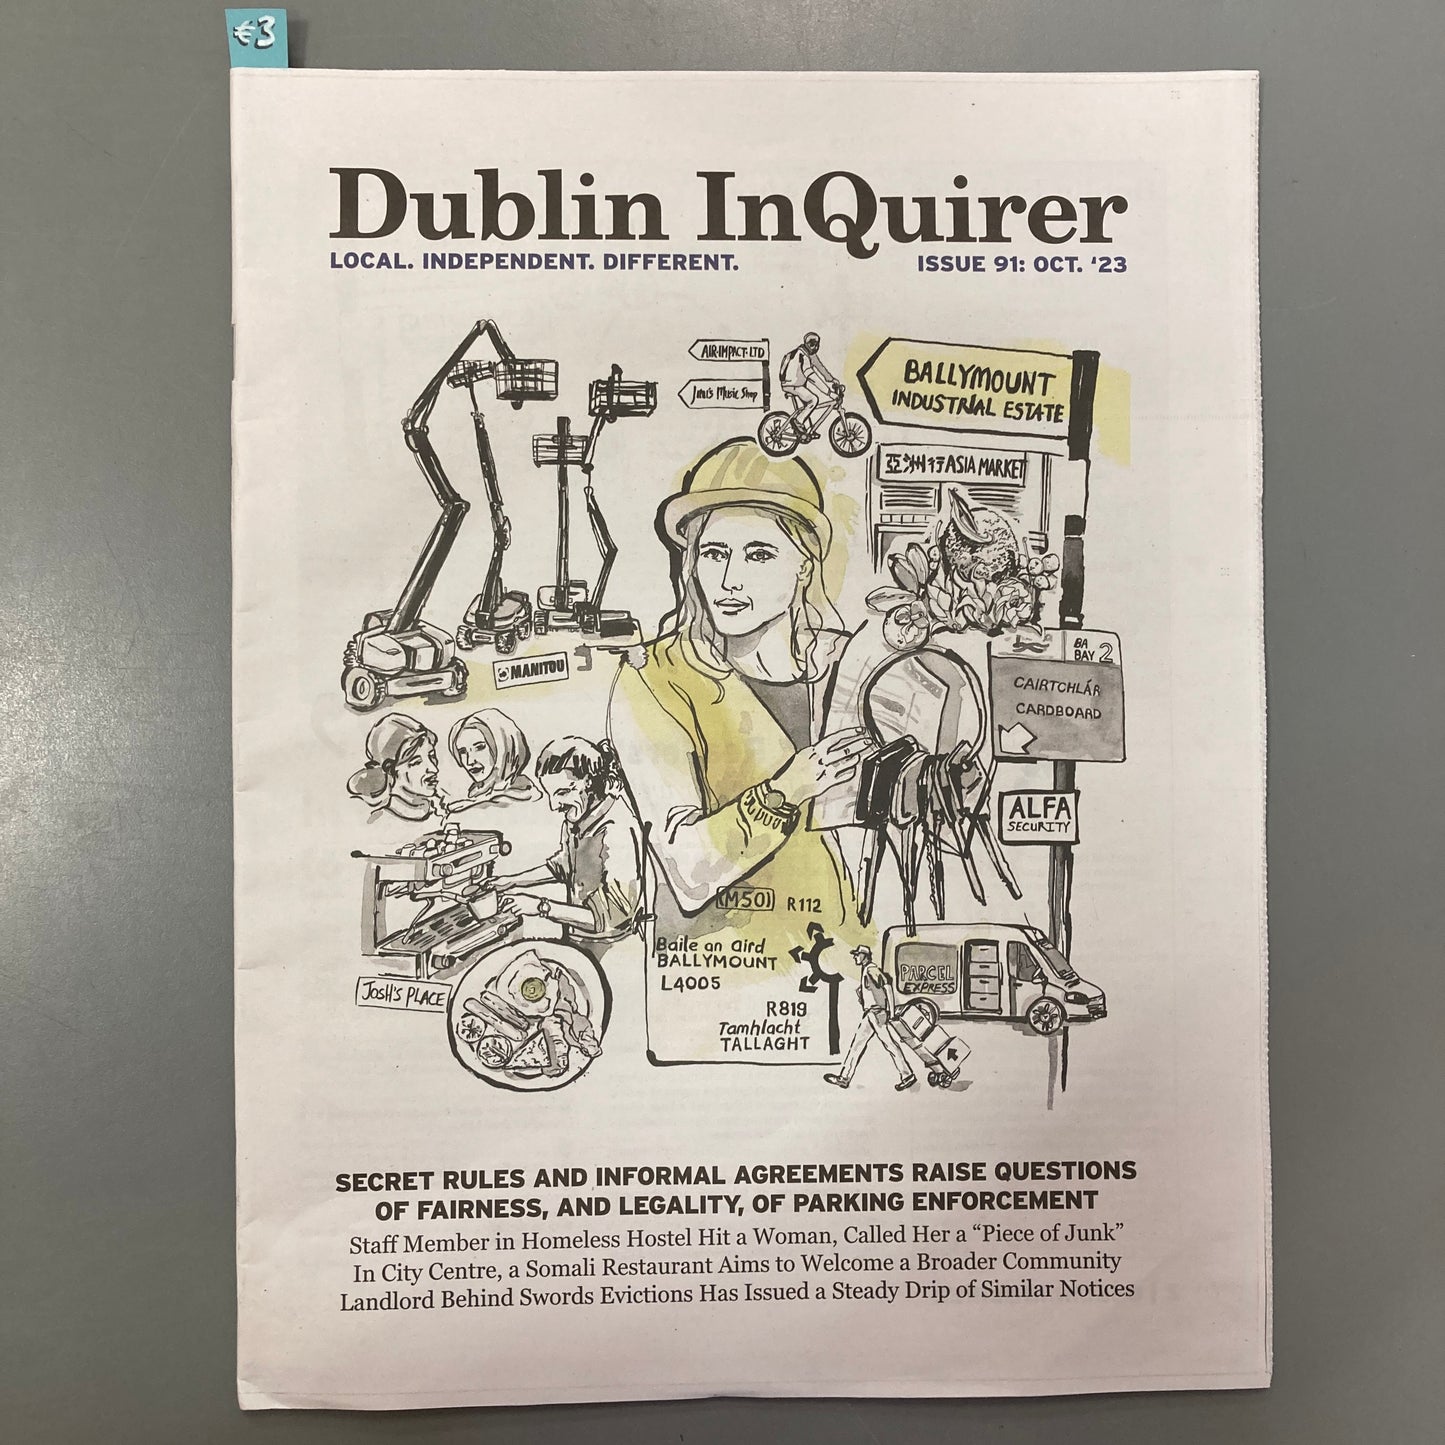 Dublin Inquirer: Issue 91